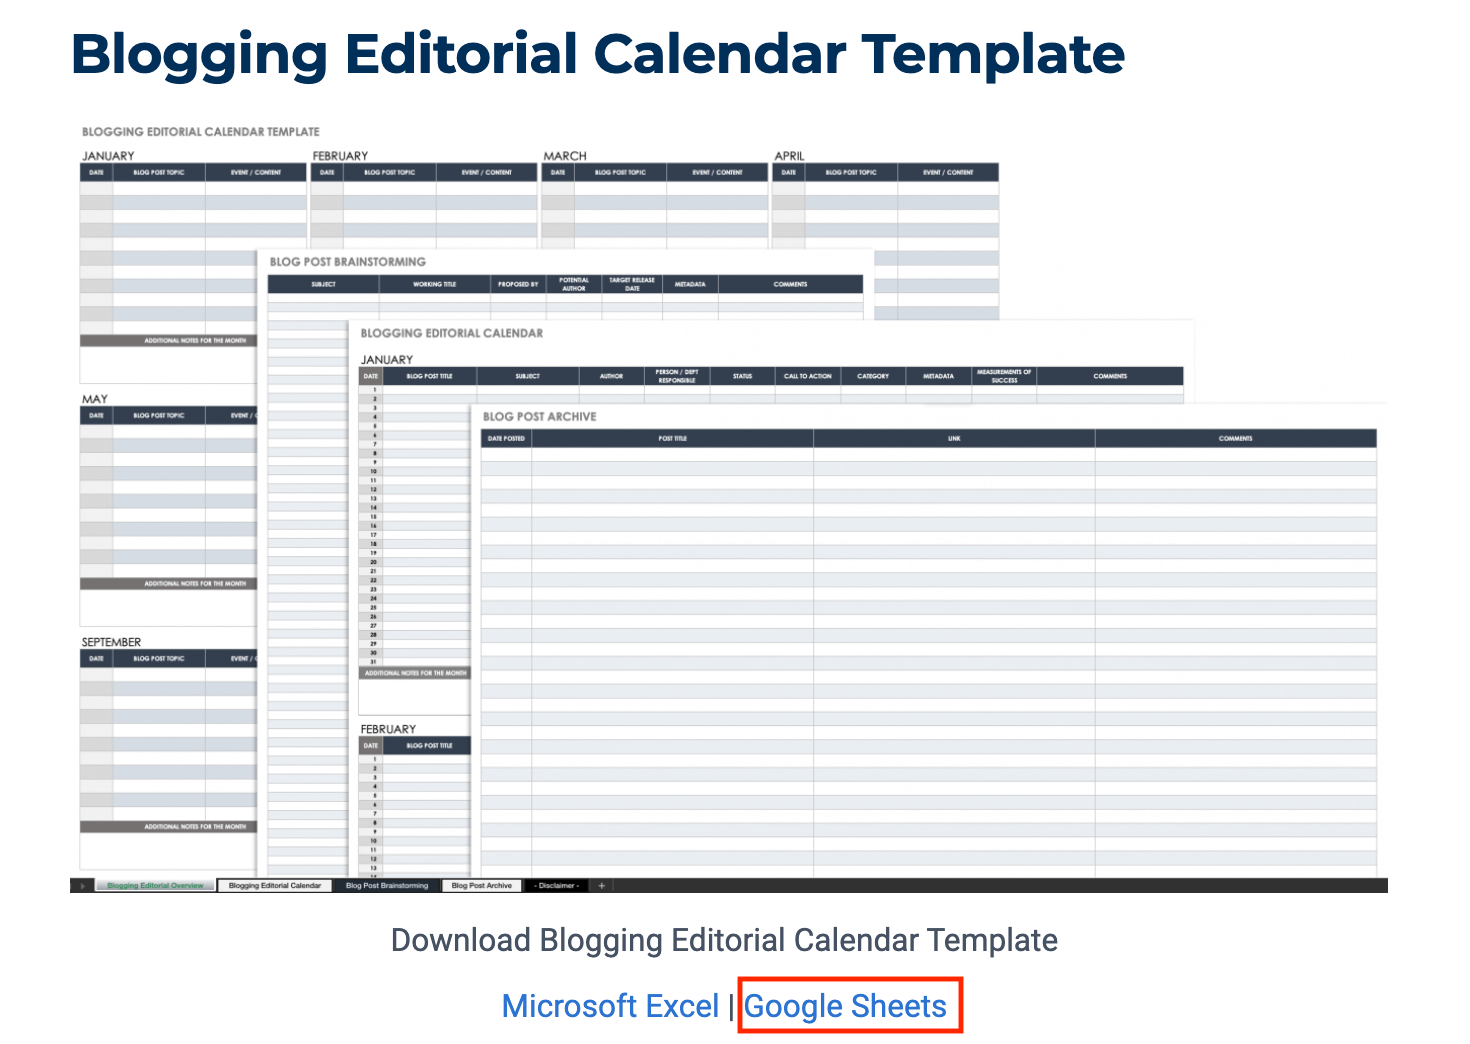 Open Blogging Calendar Template in Google Sheets